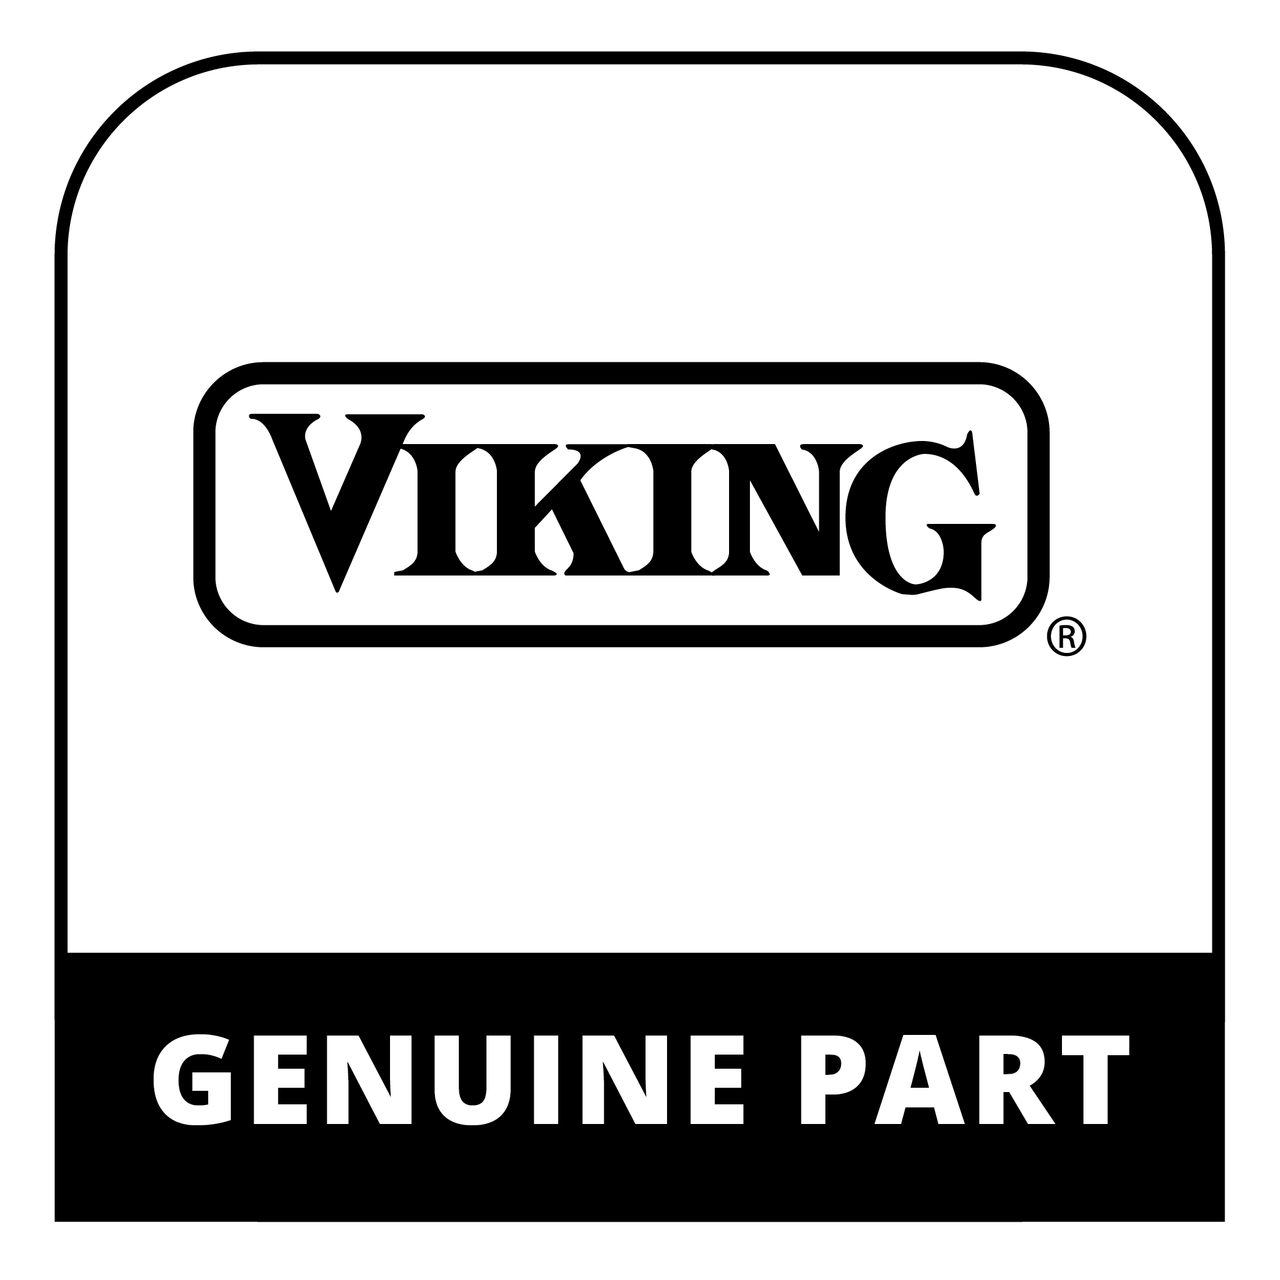 Viking 009296-000 - COMPLETE DOOR ASSEMBLY RH - SS - Genuine Viking Part